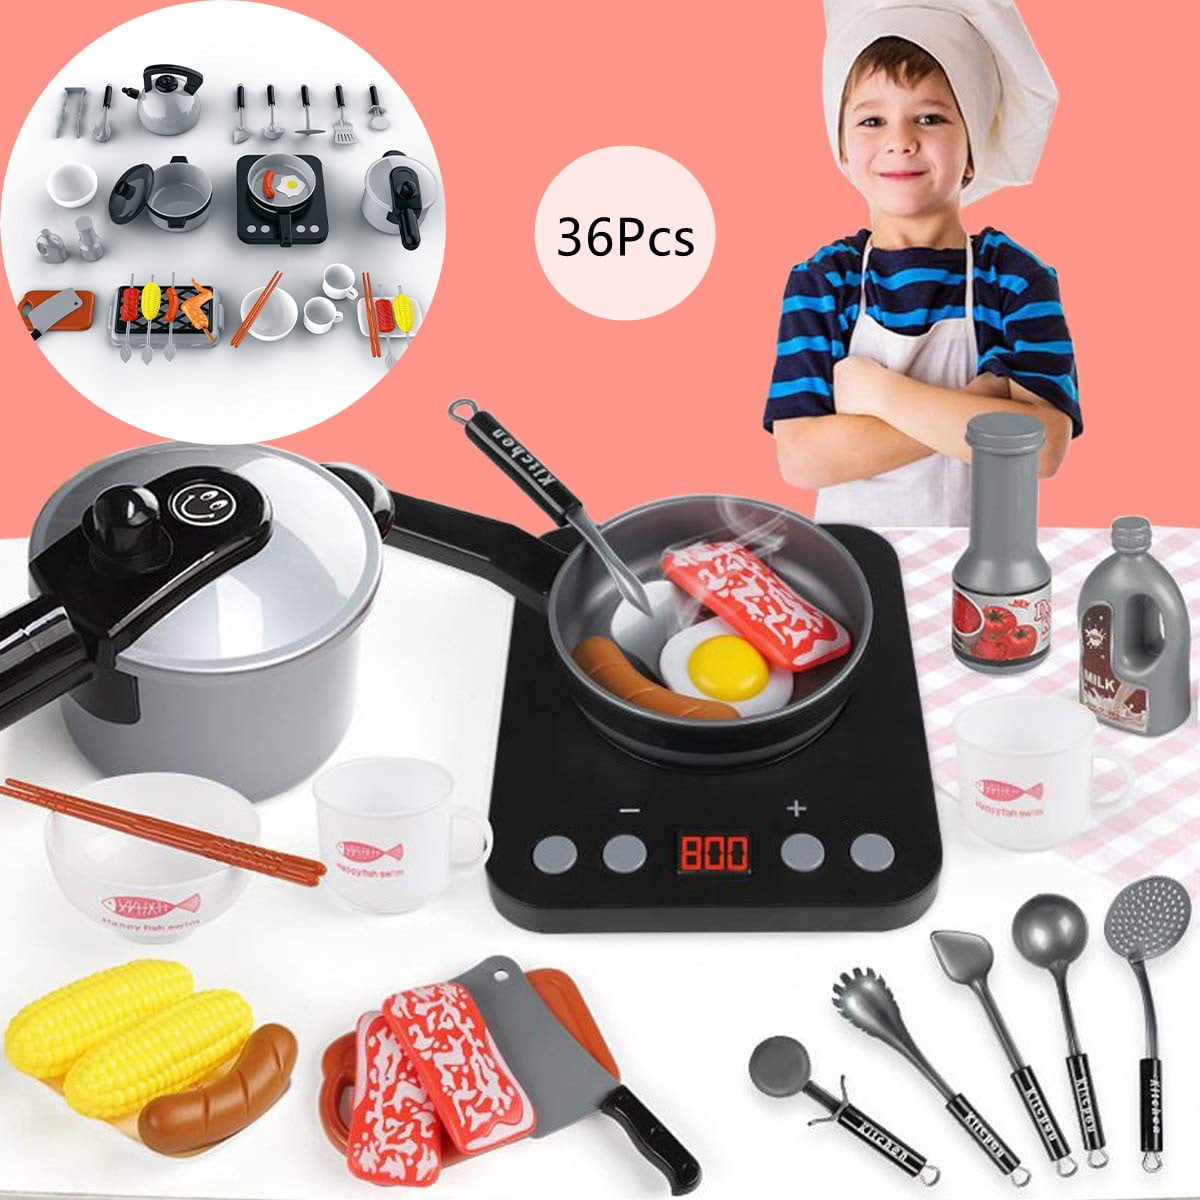 Kids pretend play toy Stir fry cooking & food set playset cooking toy 